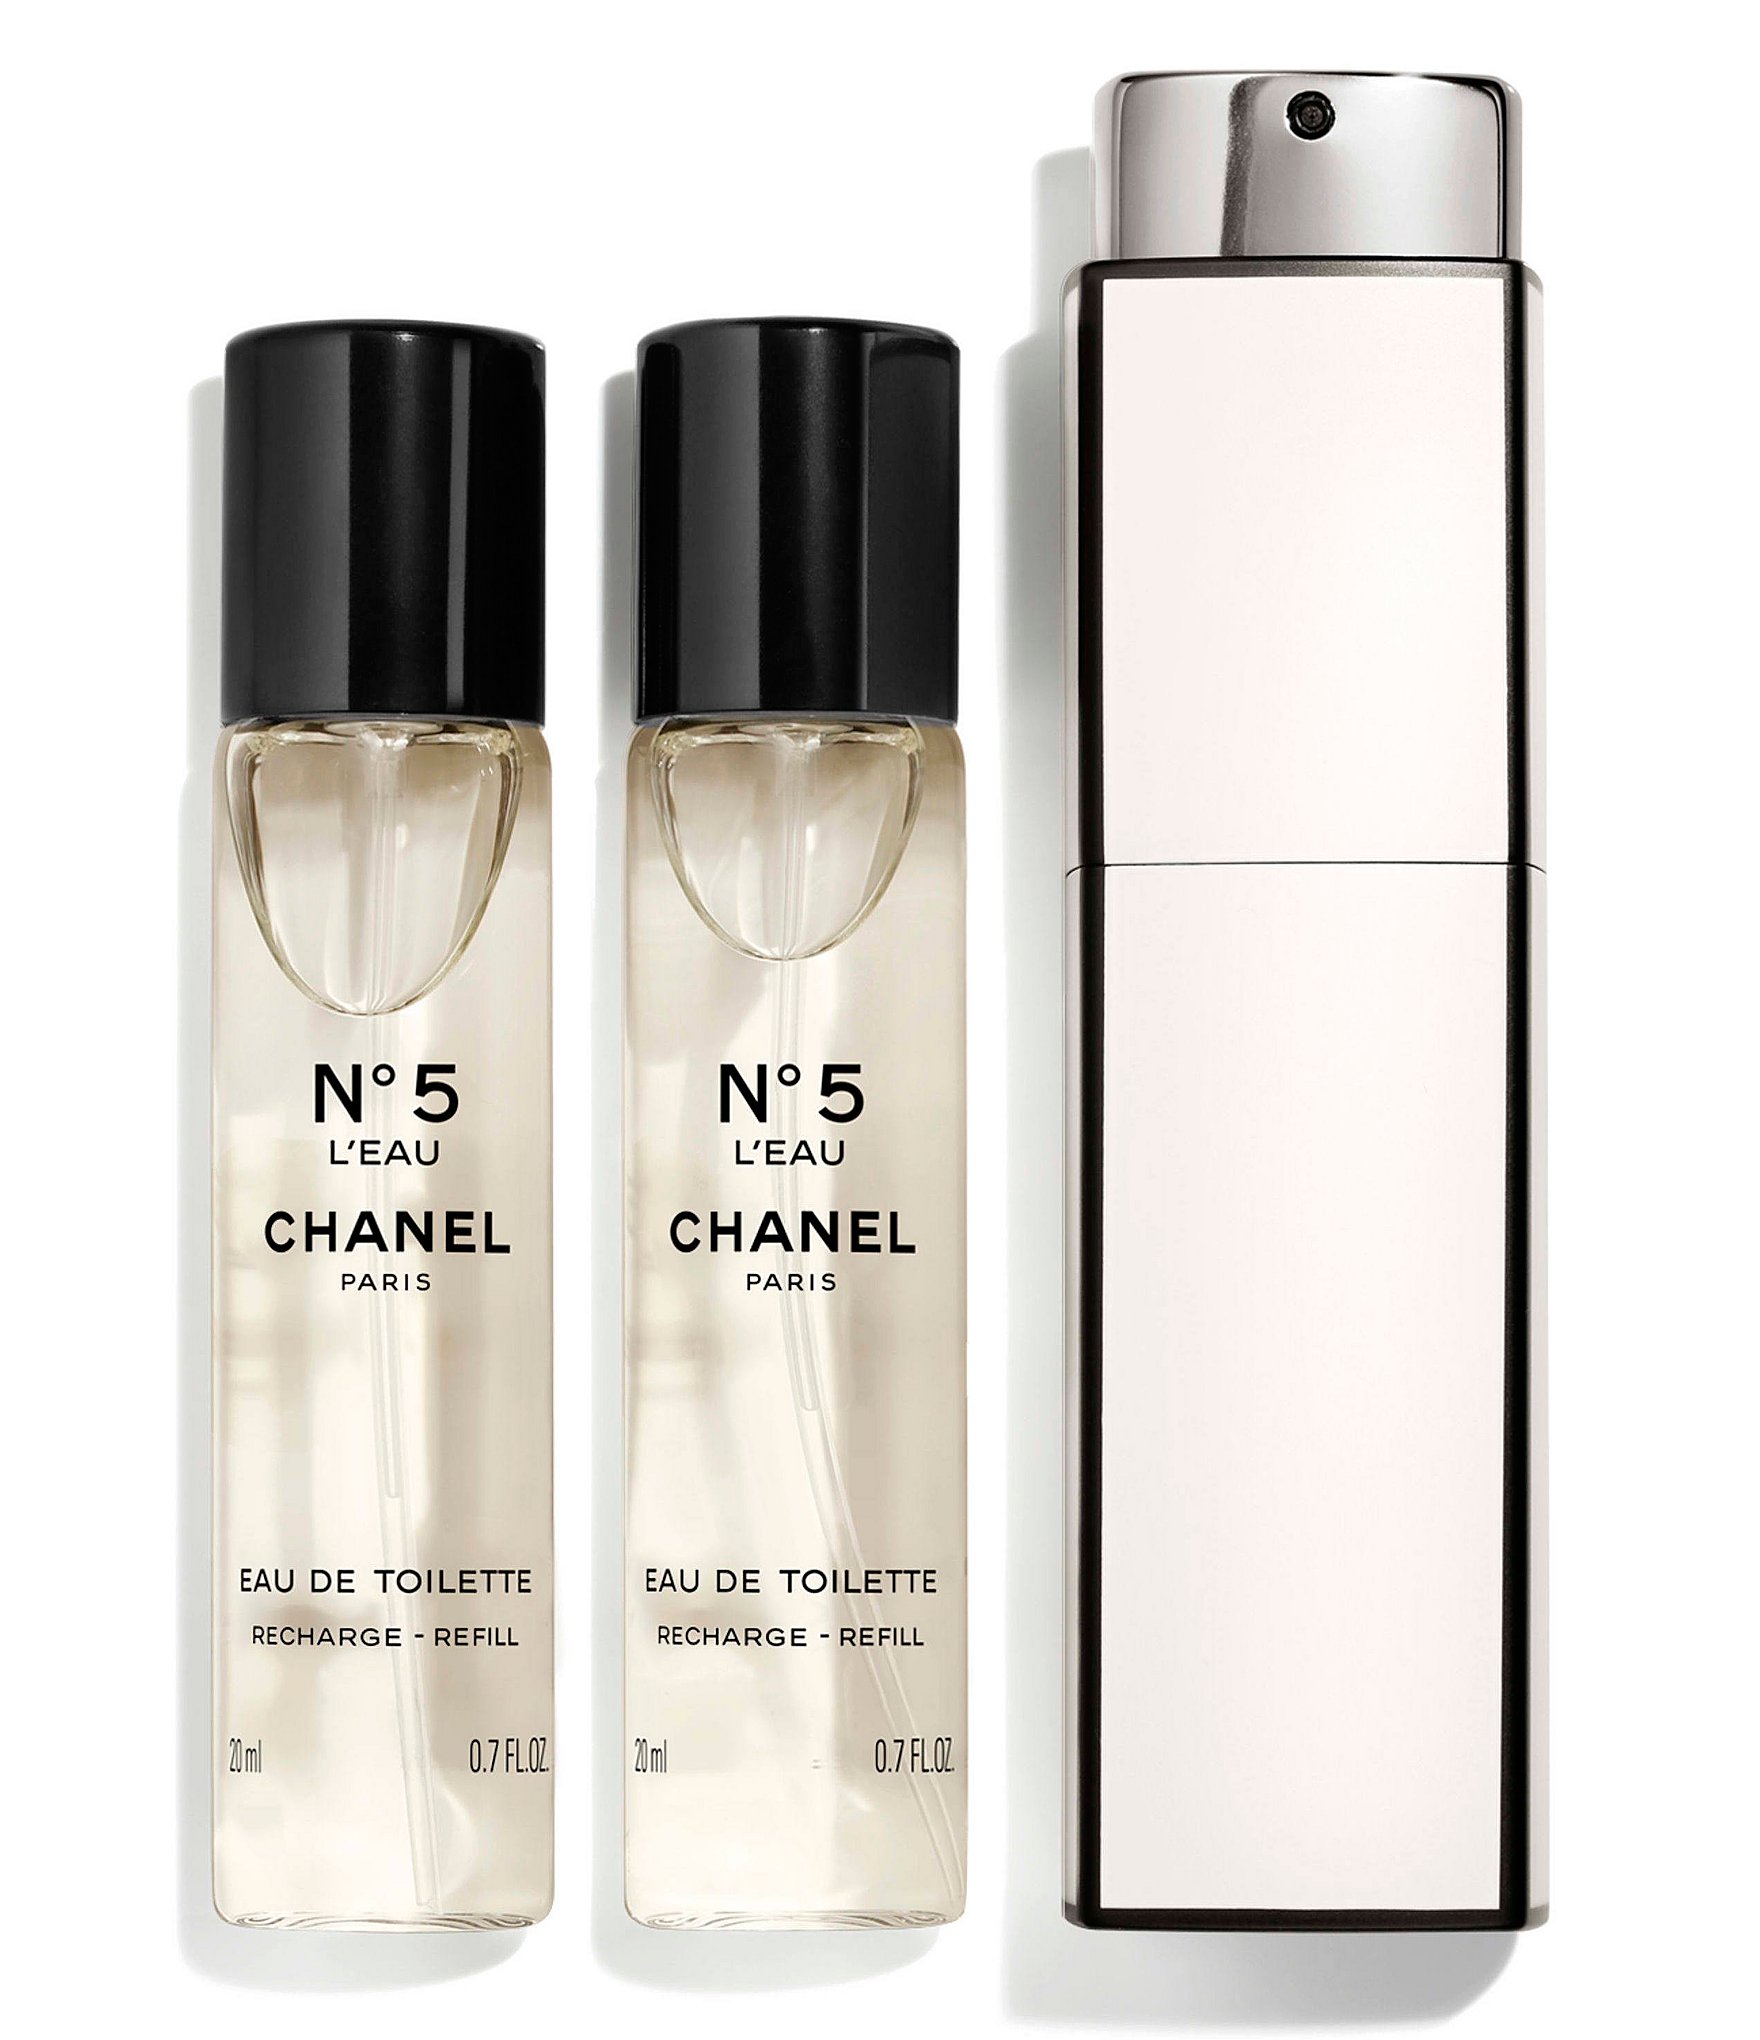 chanel 5 perfume 3.4 women